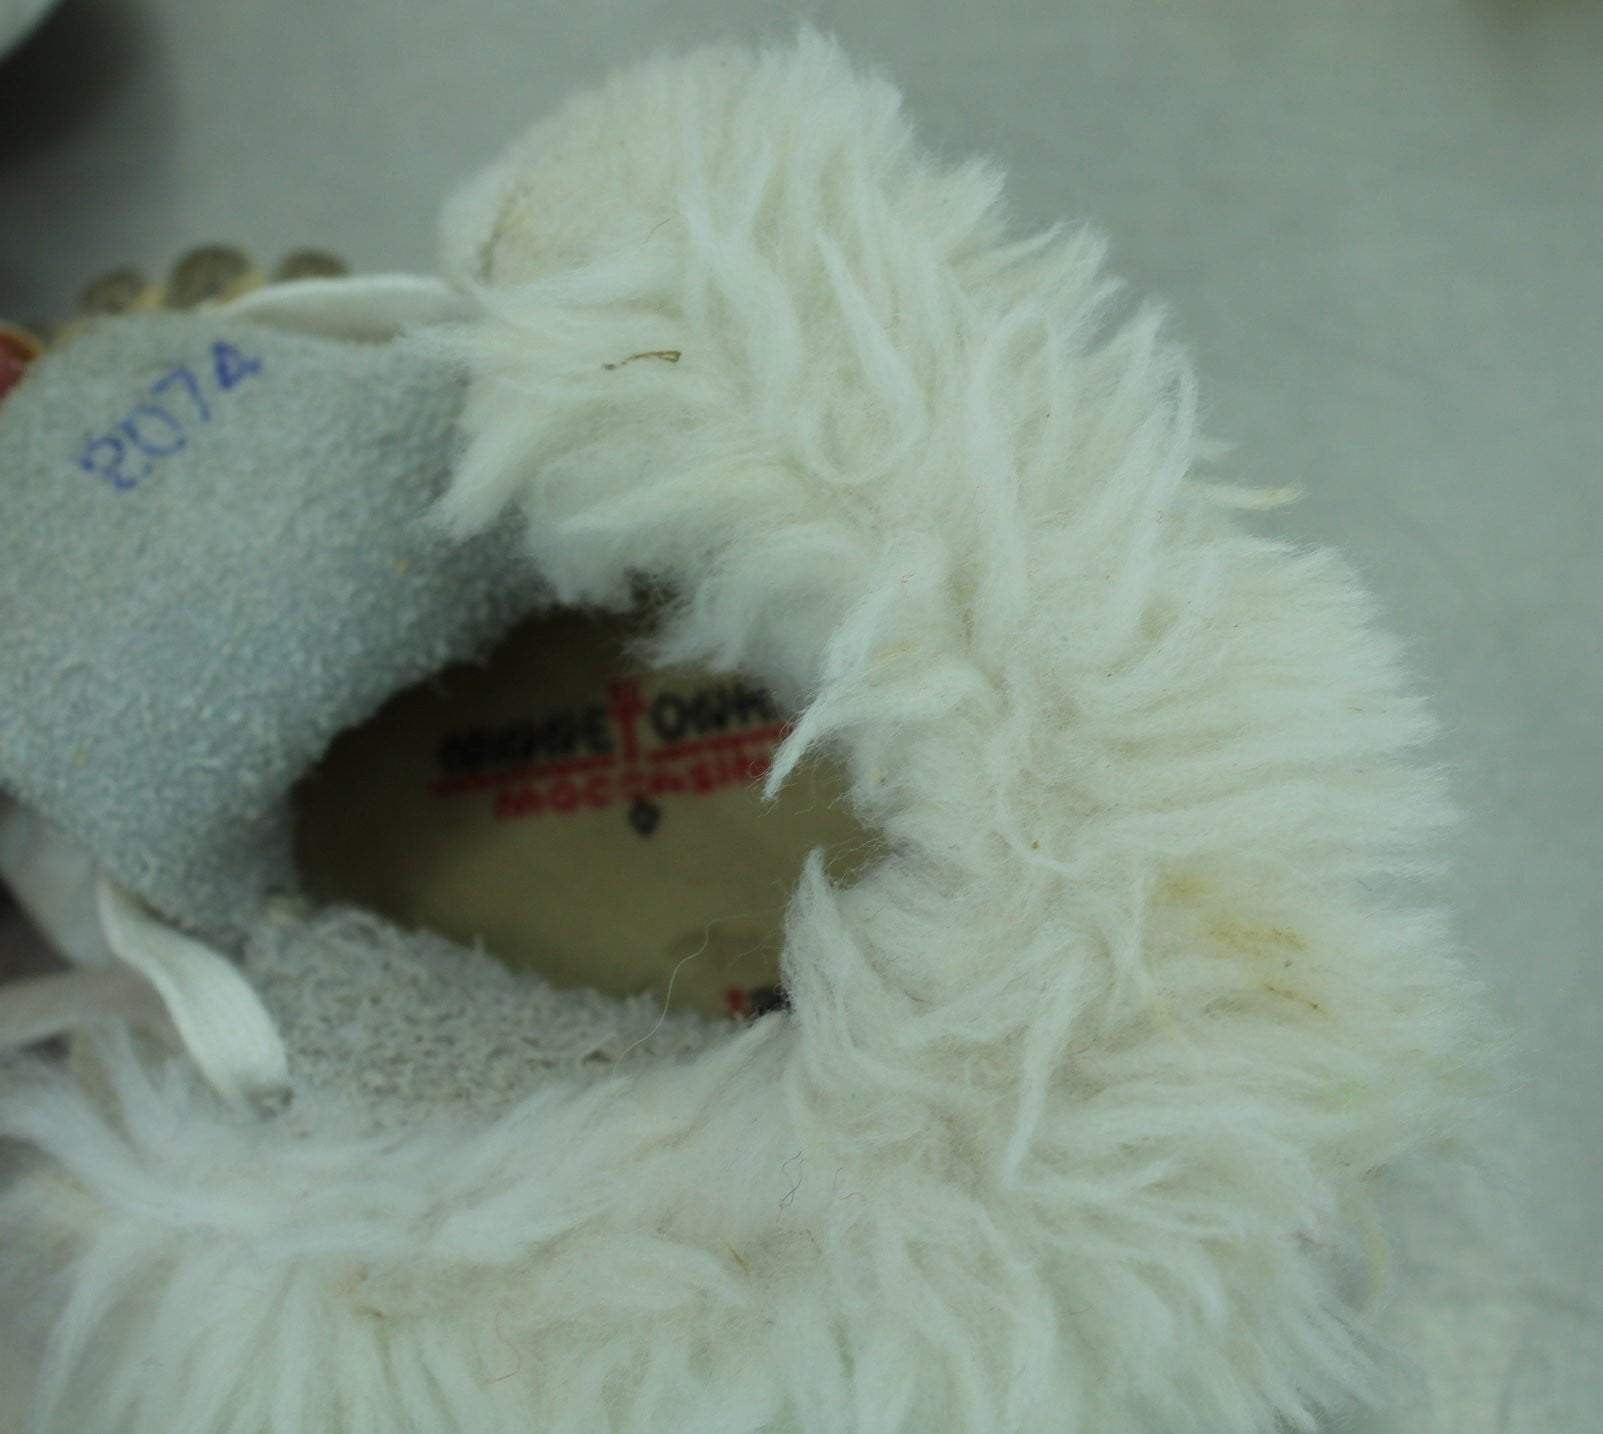 Minnetonka Vintage Infant Child Moccasins Fur Beaded Deerskin Leather Shoes 4 1/4" Sole  infant size 0 to 1